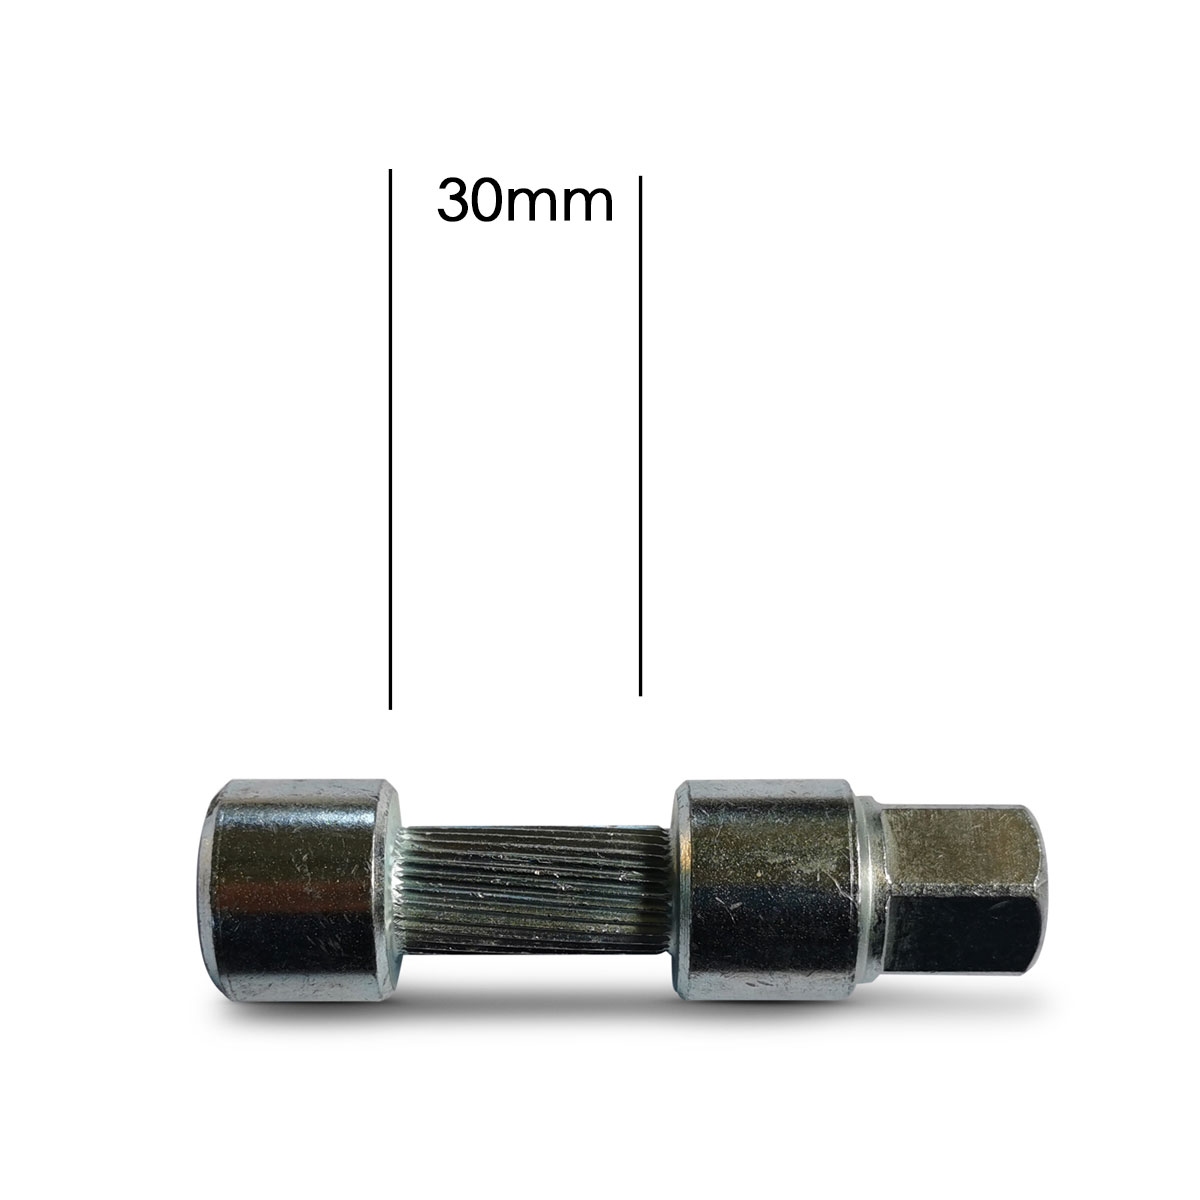 tension roller, QuickLift, diameter 14.5 mm, grip surface wi